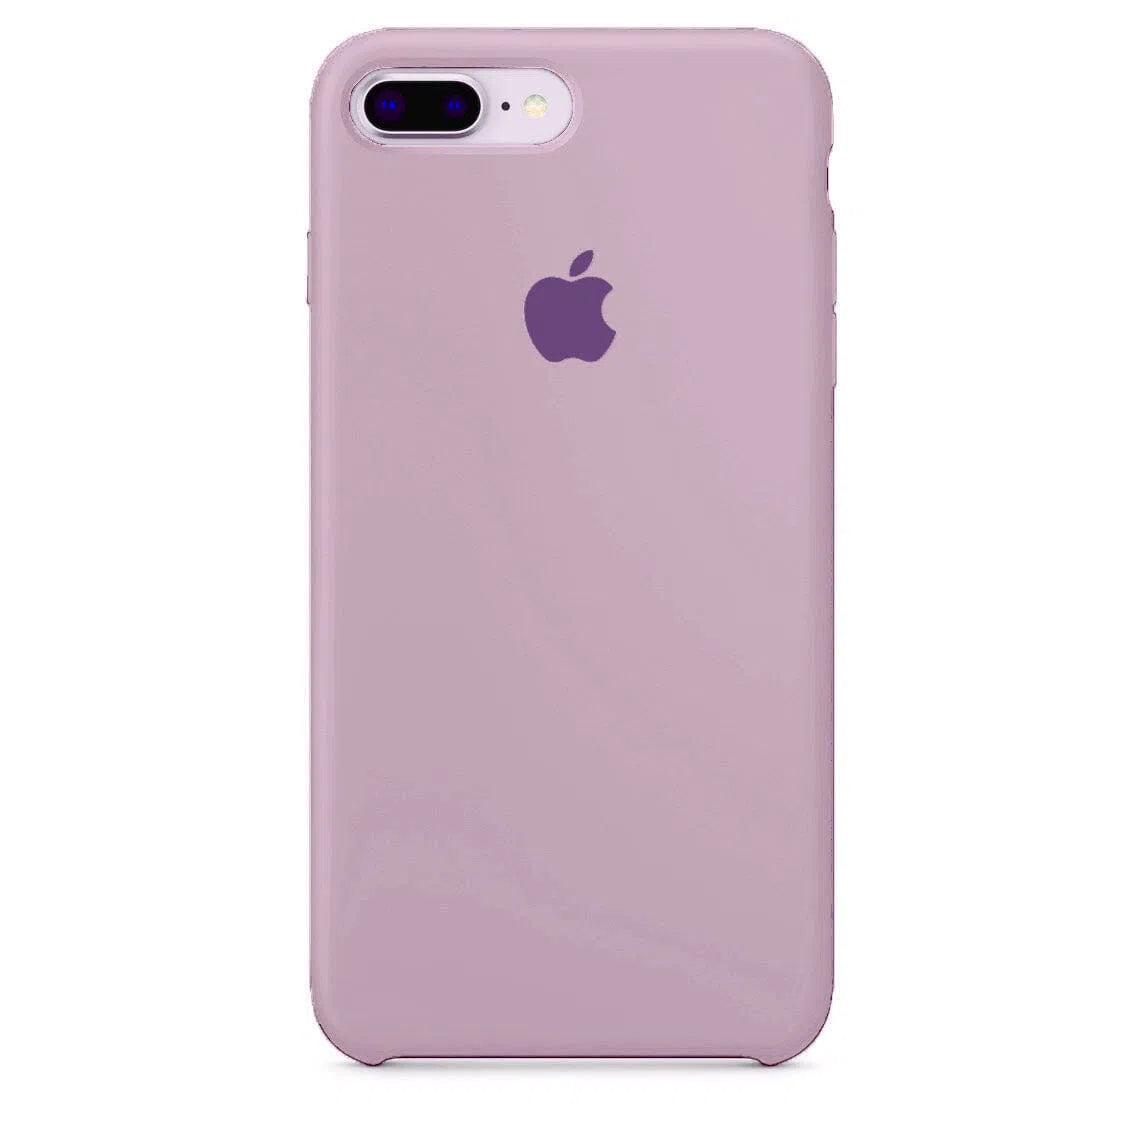 Husa iPhone Silicone Case Lavender (Mov Pal) Anca's Store 7Plus/8Plus 